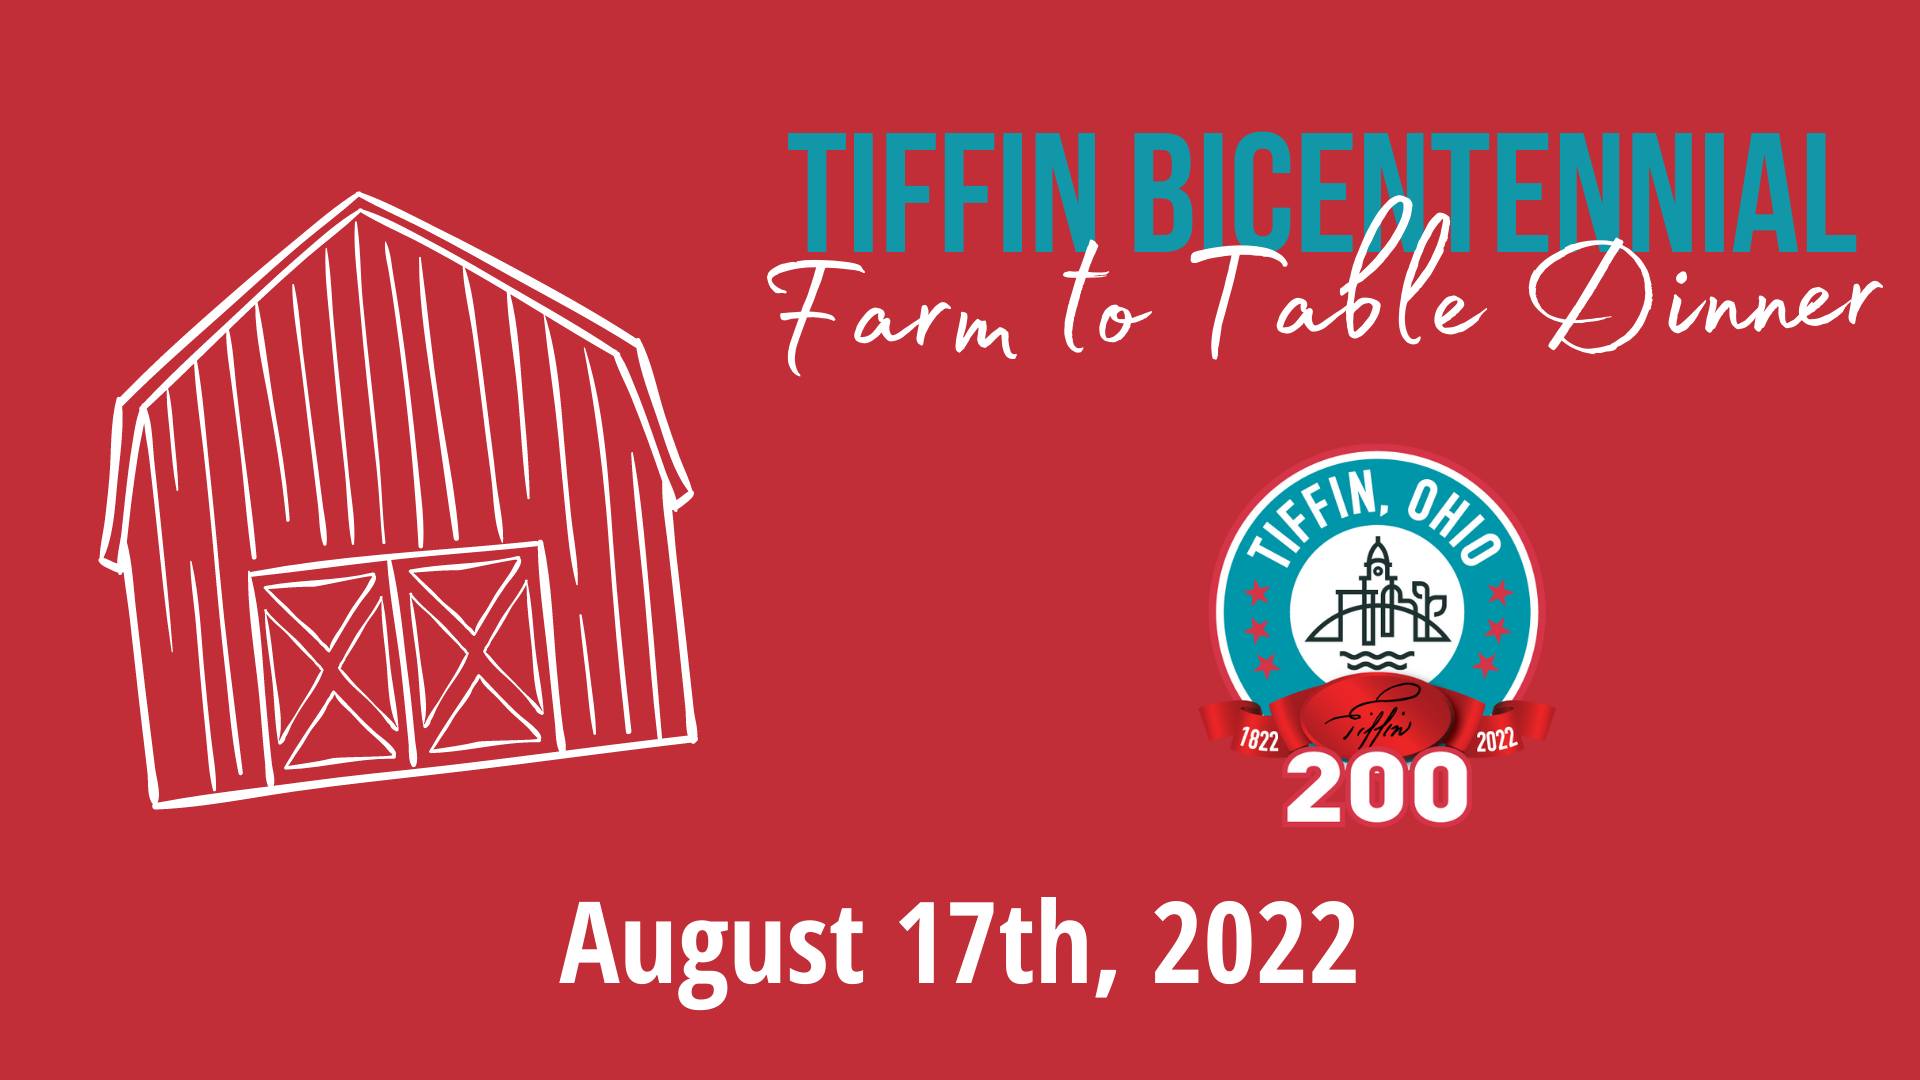 Tiffin Bicentennial: Farm to Table Dinner